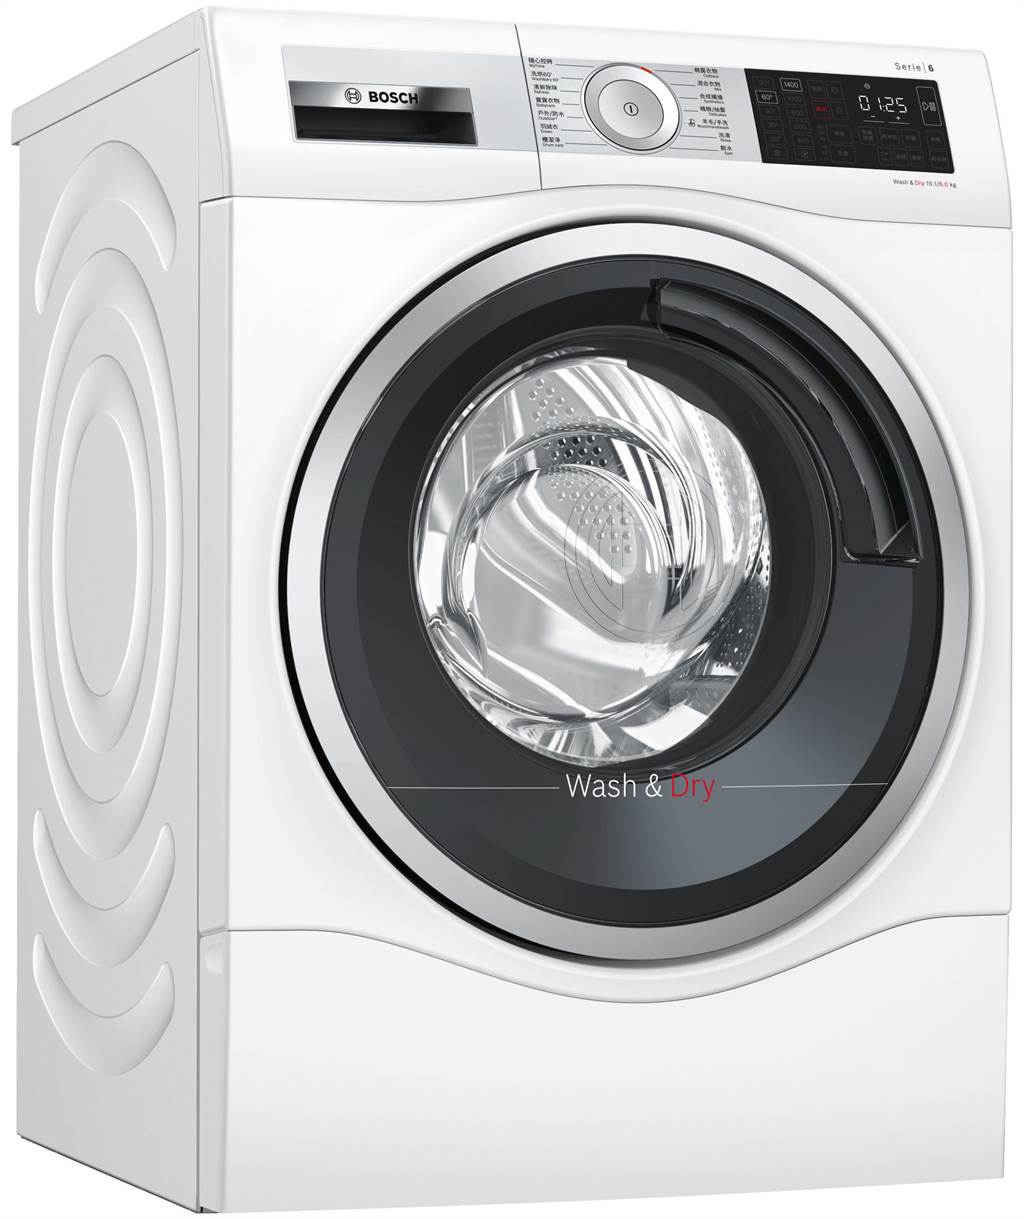 Bosch洗烘衣機可設定高溫60度洗程，達到高溫除菌效果。（Bosch提供）